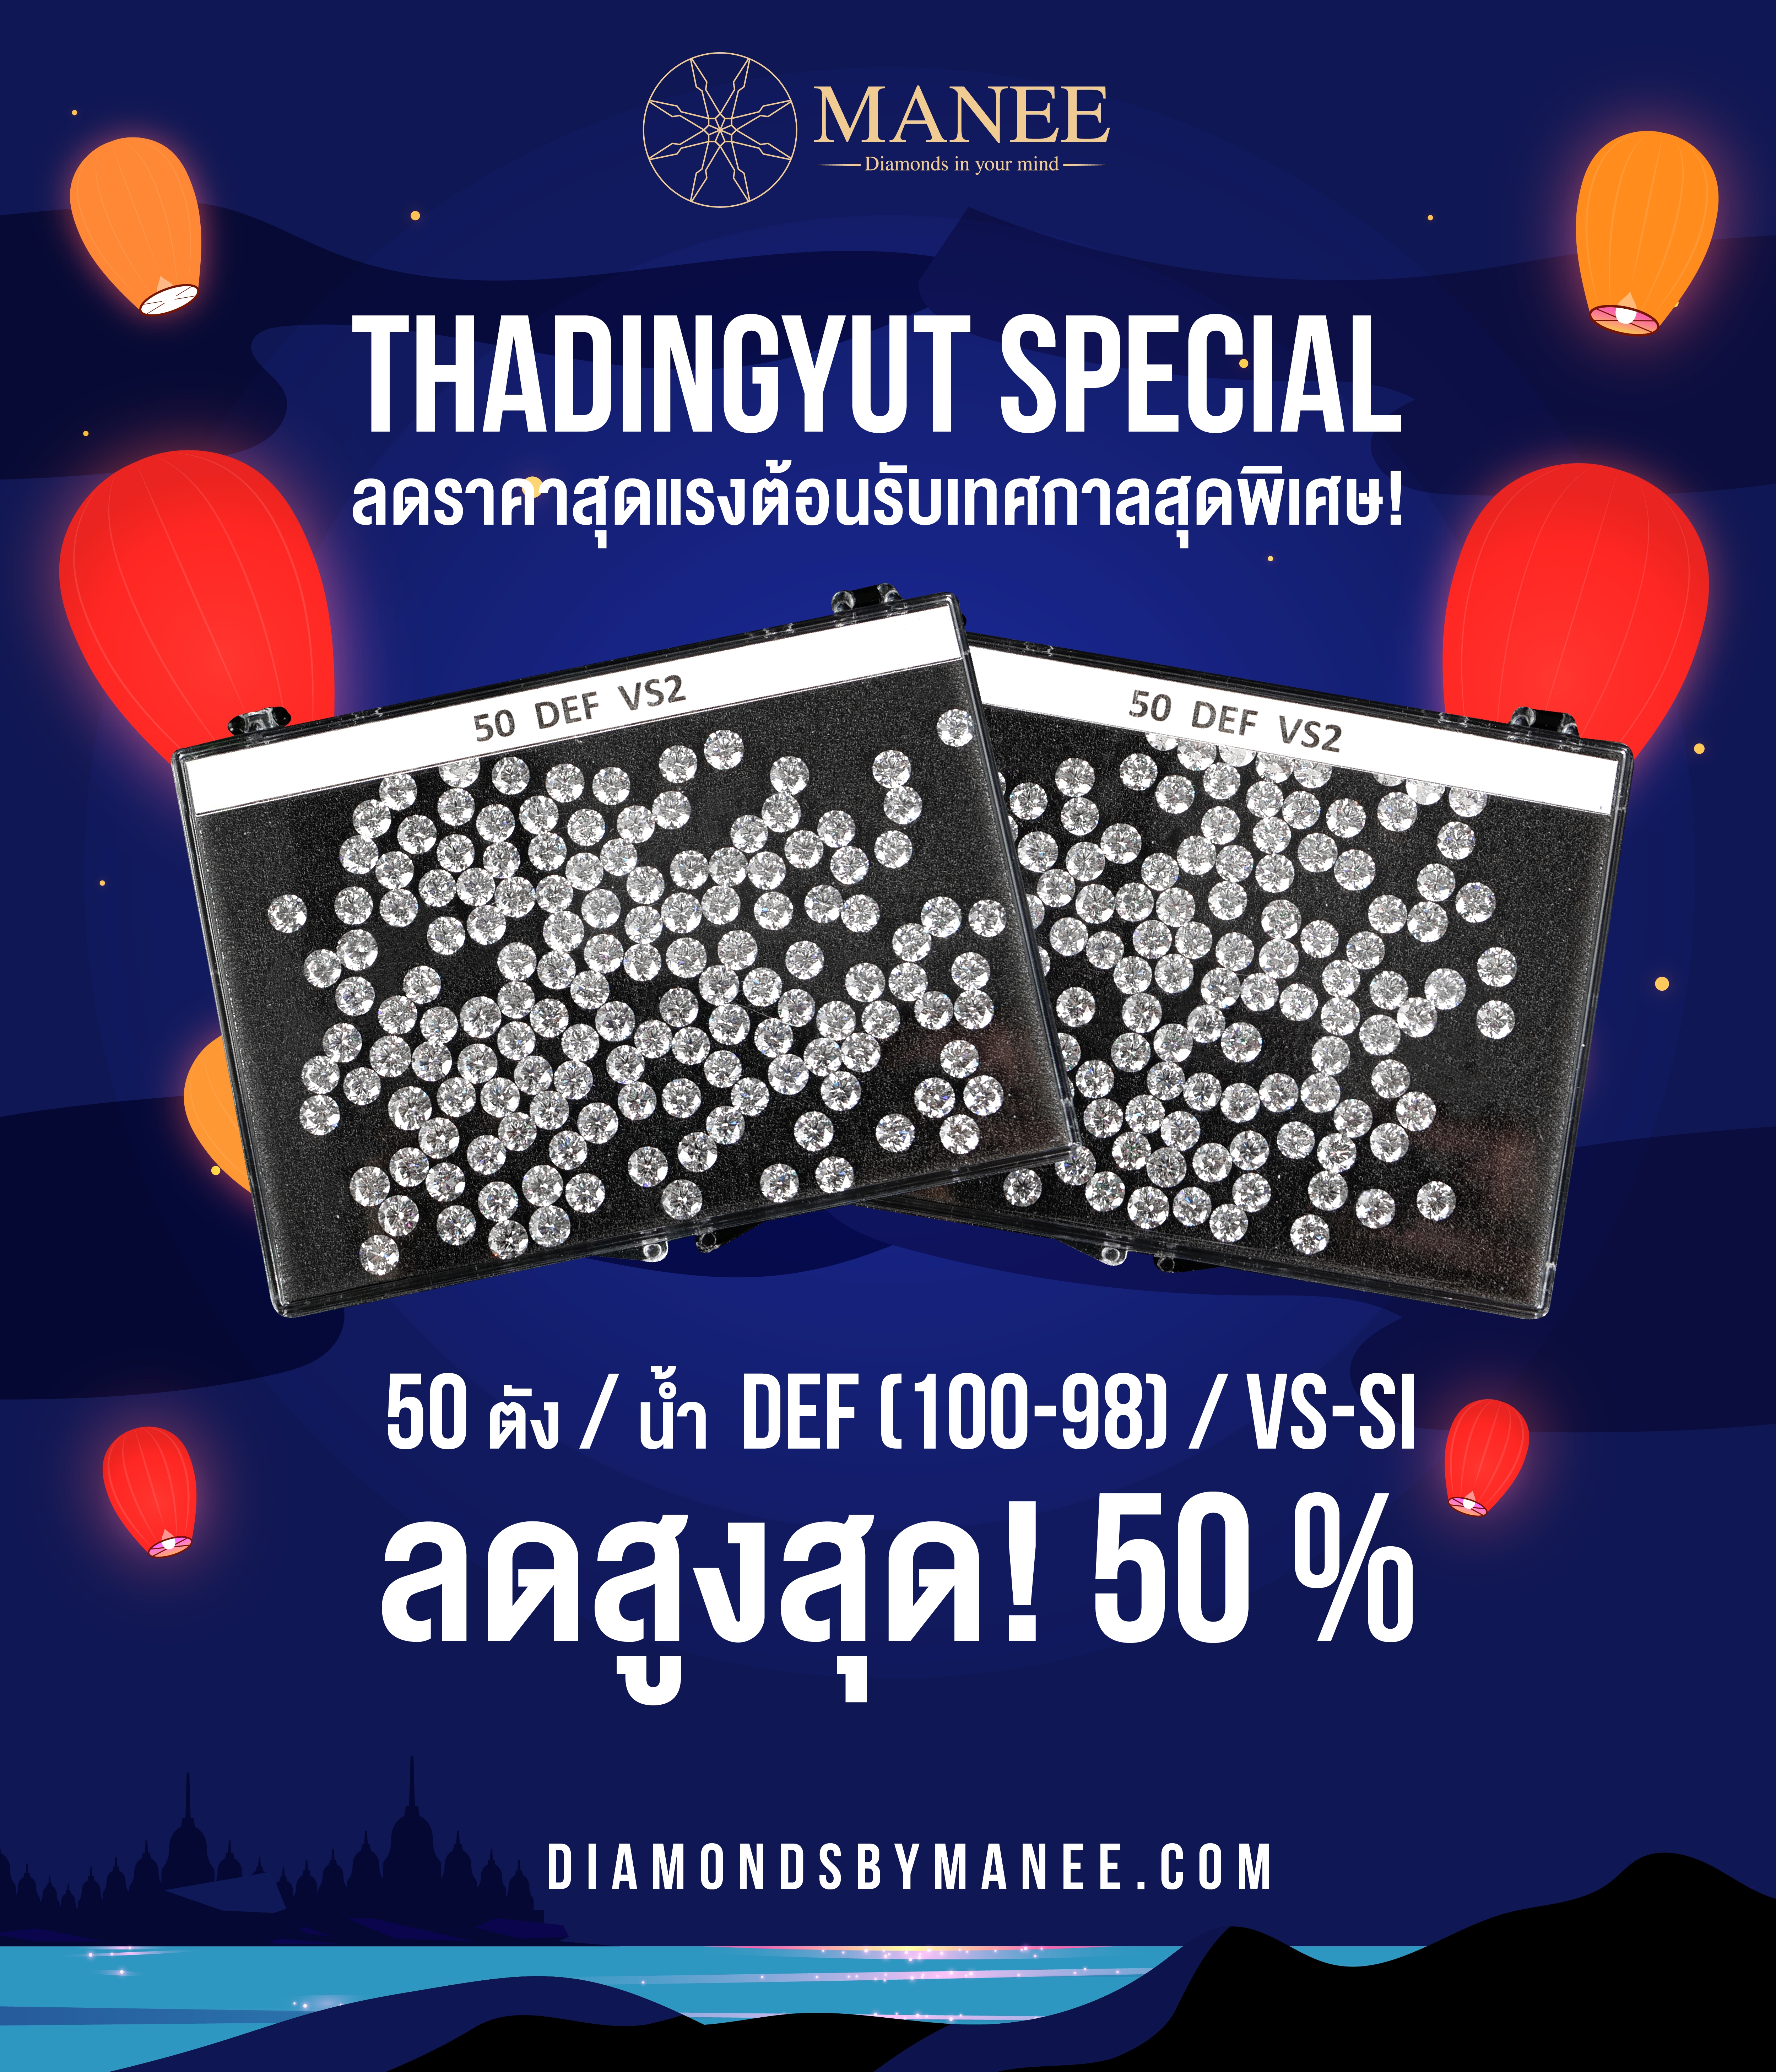 Buy Natural Diamond Online - Diamonds By Manee